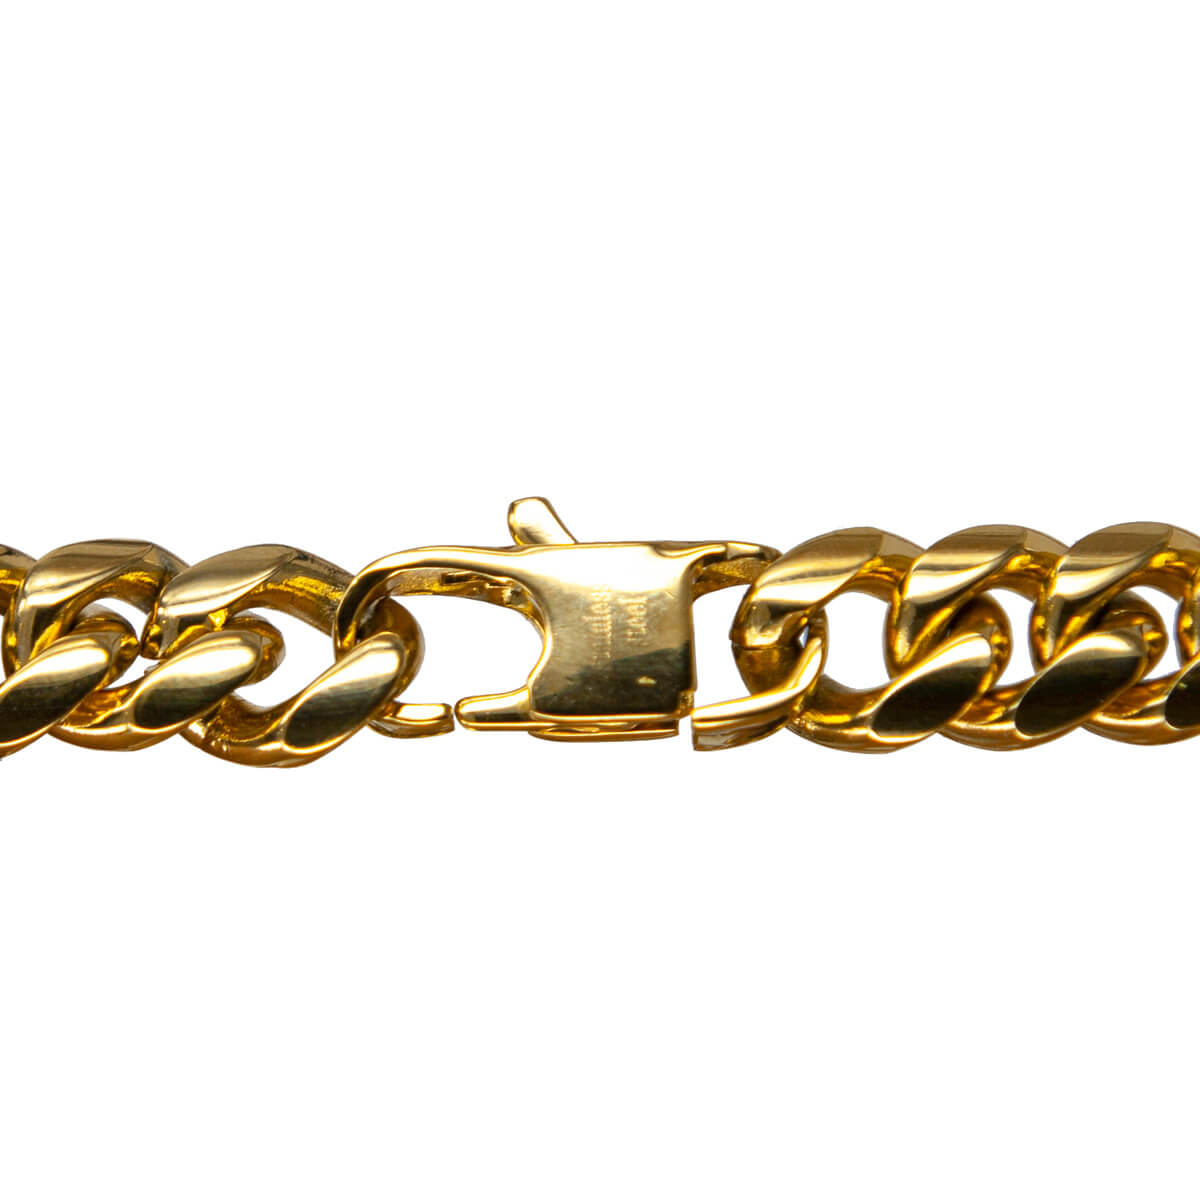 Steel armour chain bracelet 1cm wide